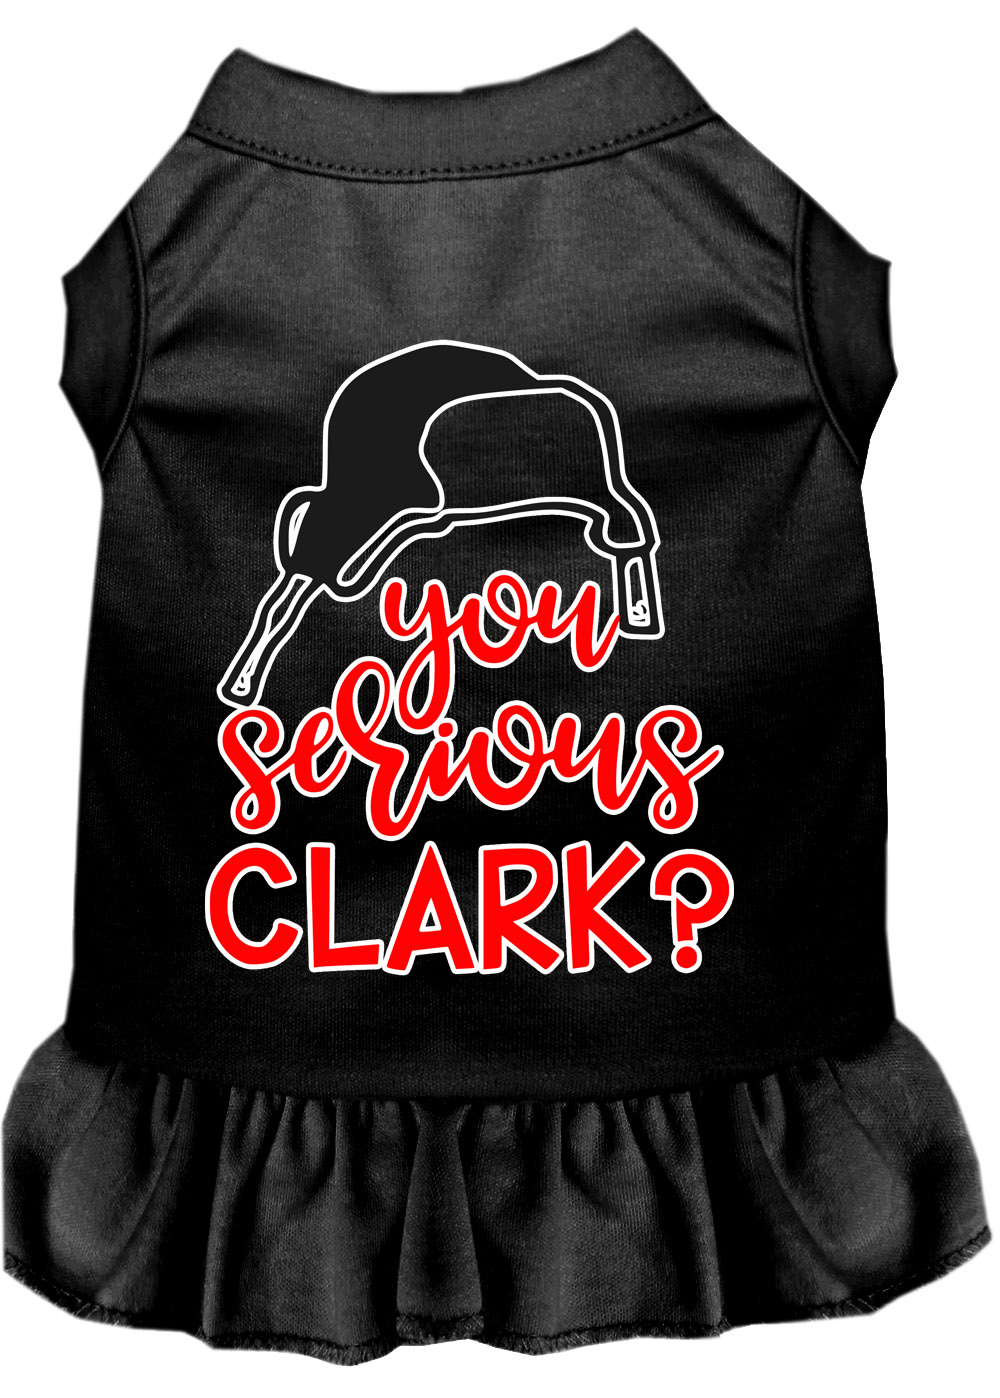 You Serious Clark? Screen Print Dog Dress Black XL